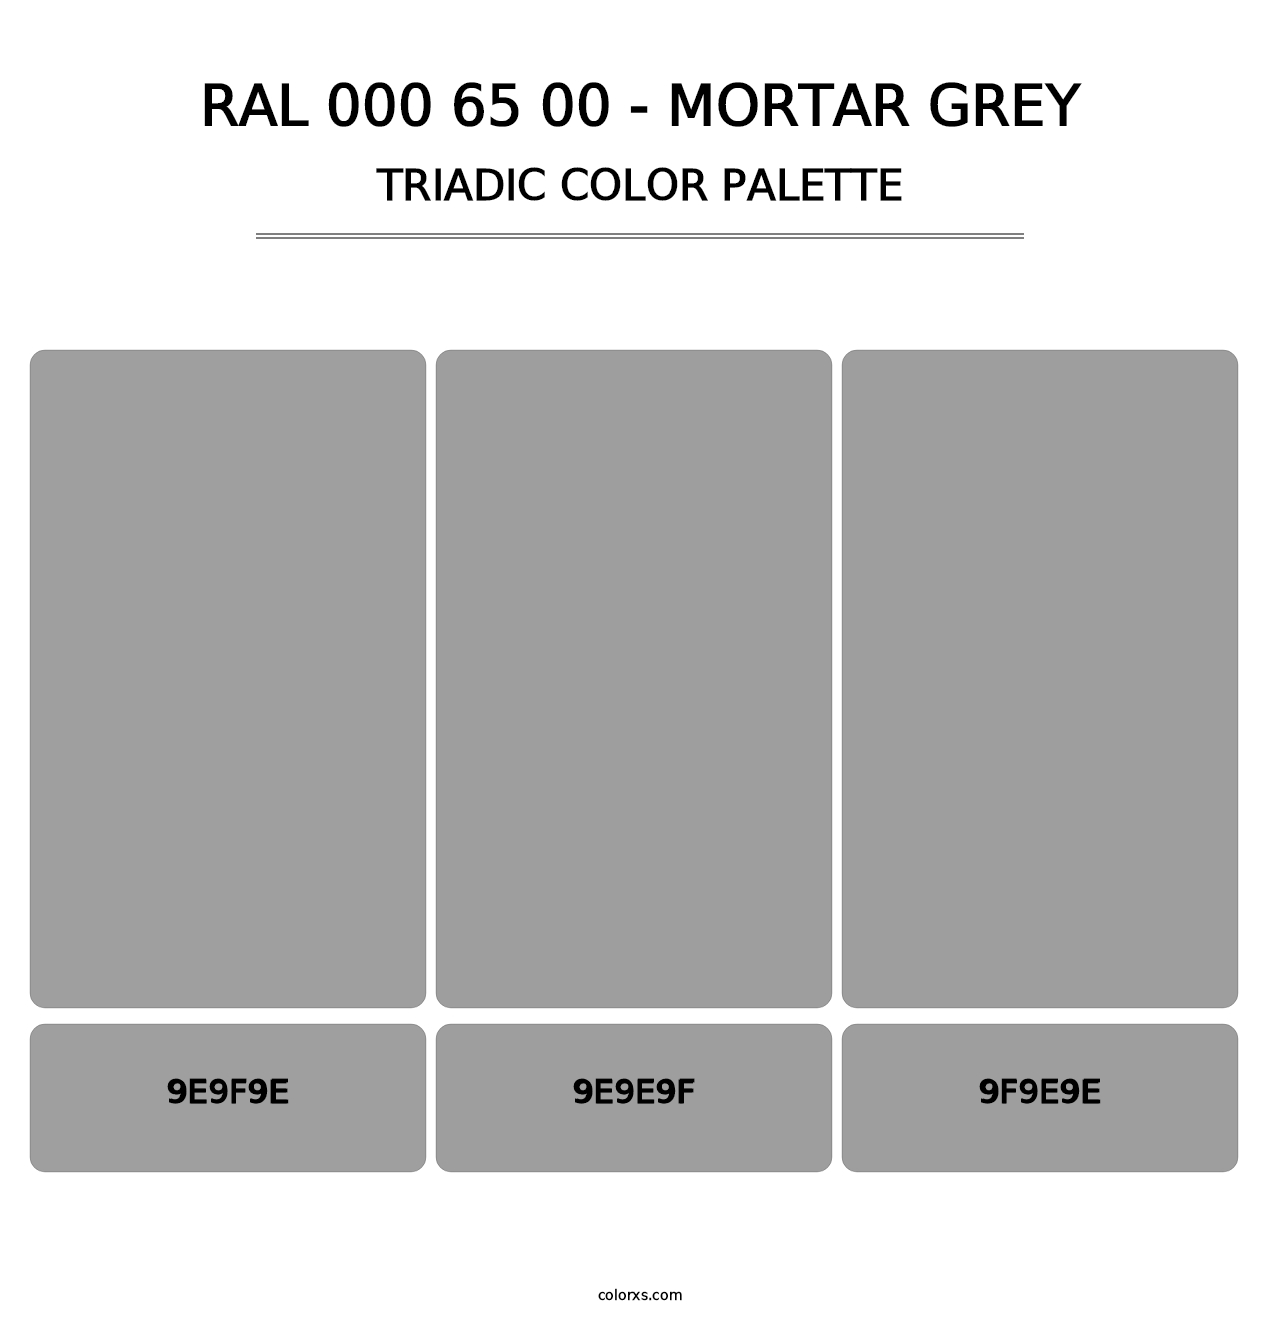 RAL 000 65 00 - Mortar Grey - Triadic Color Palette